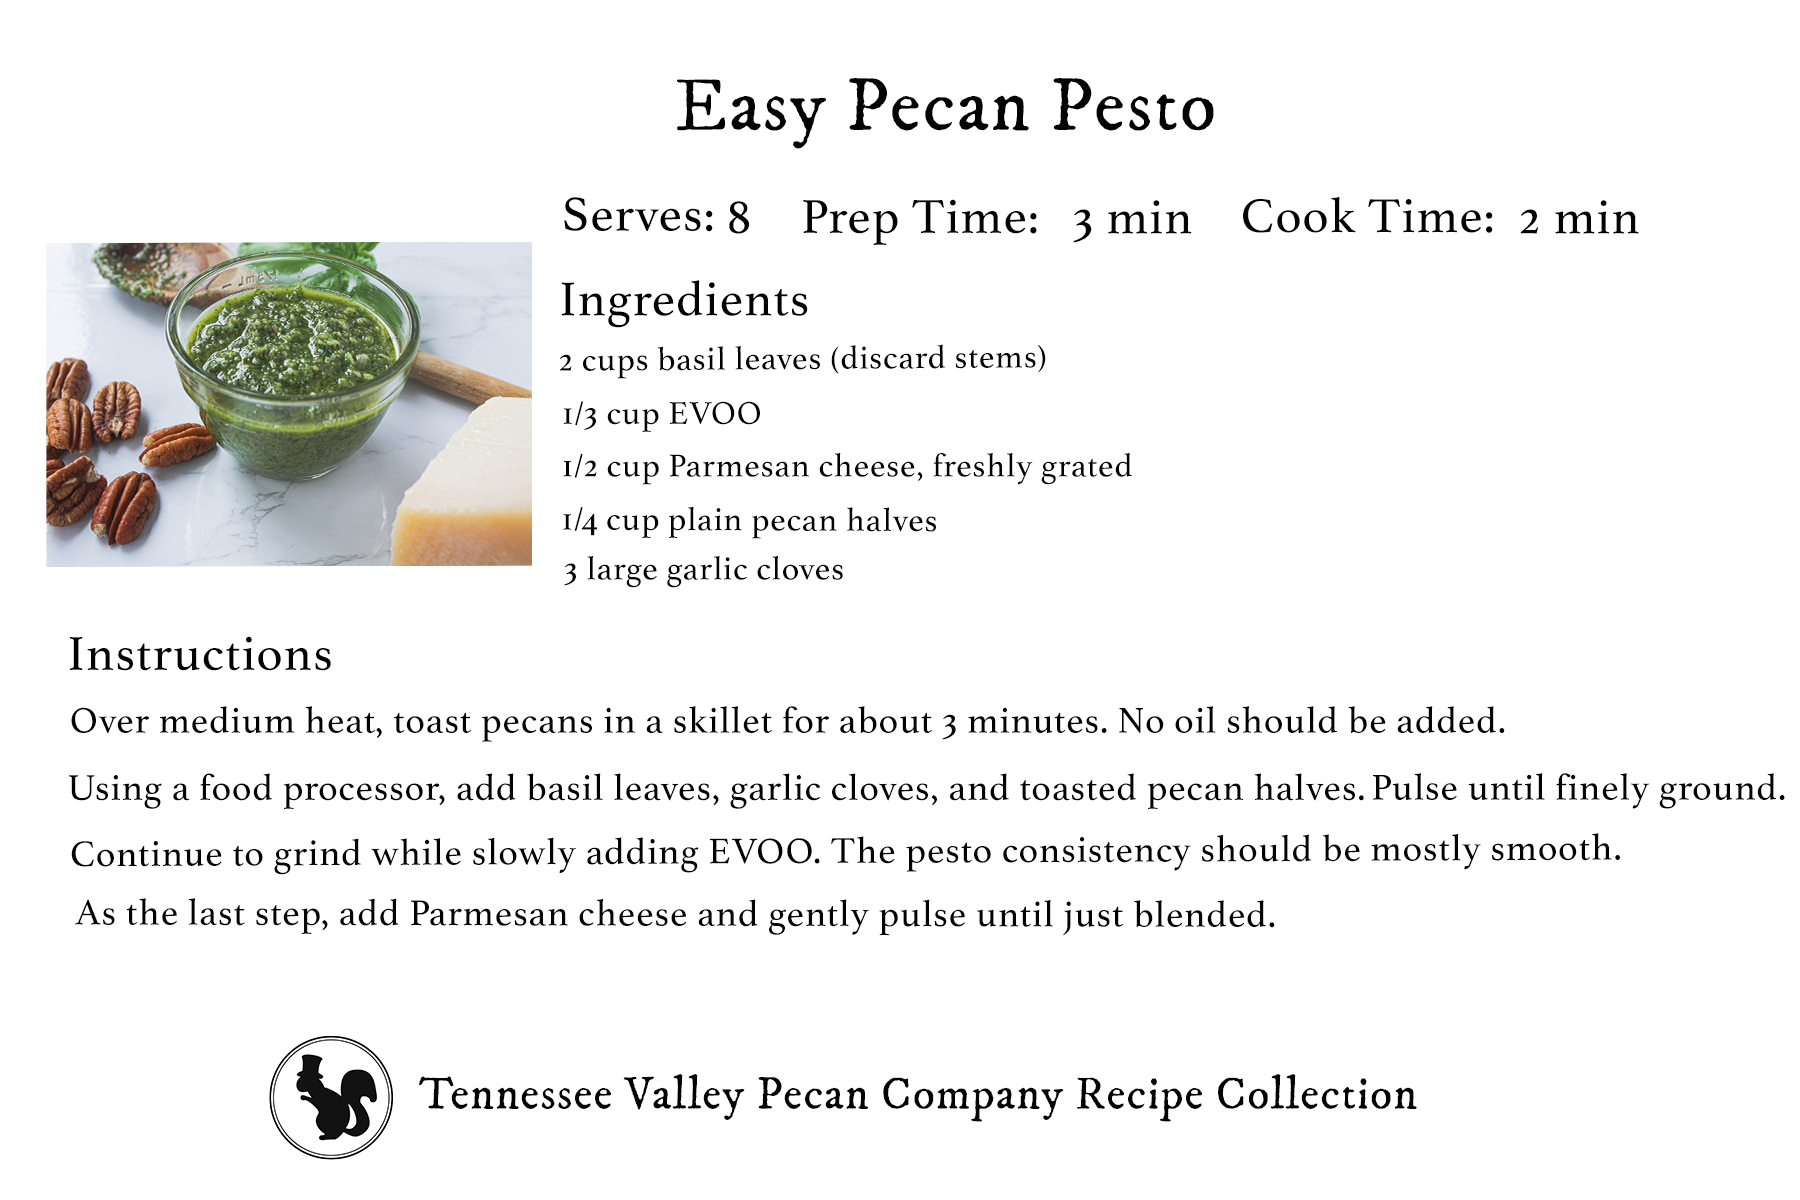 pecan pesto recipe card | Tennessee Valley Pecan Company